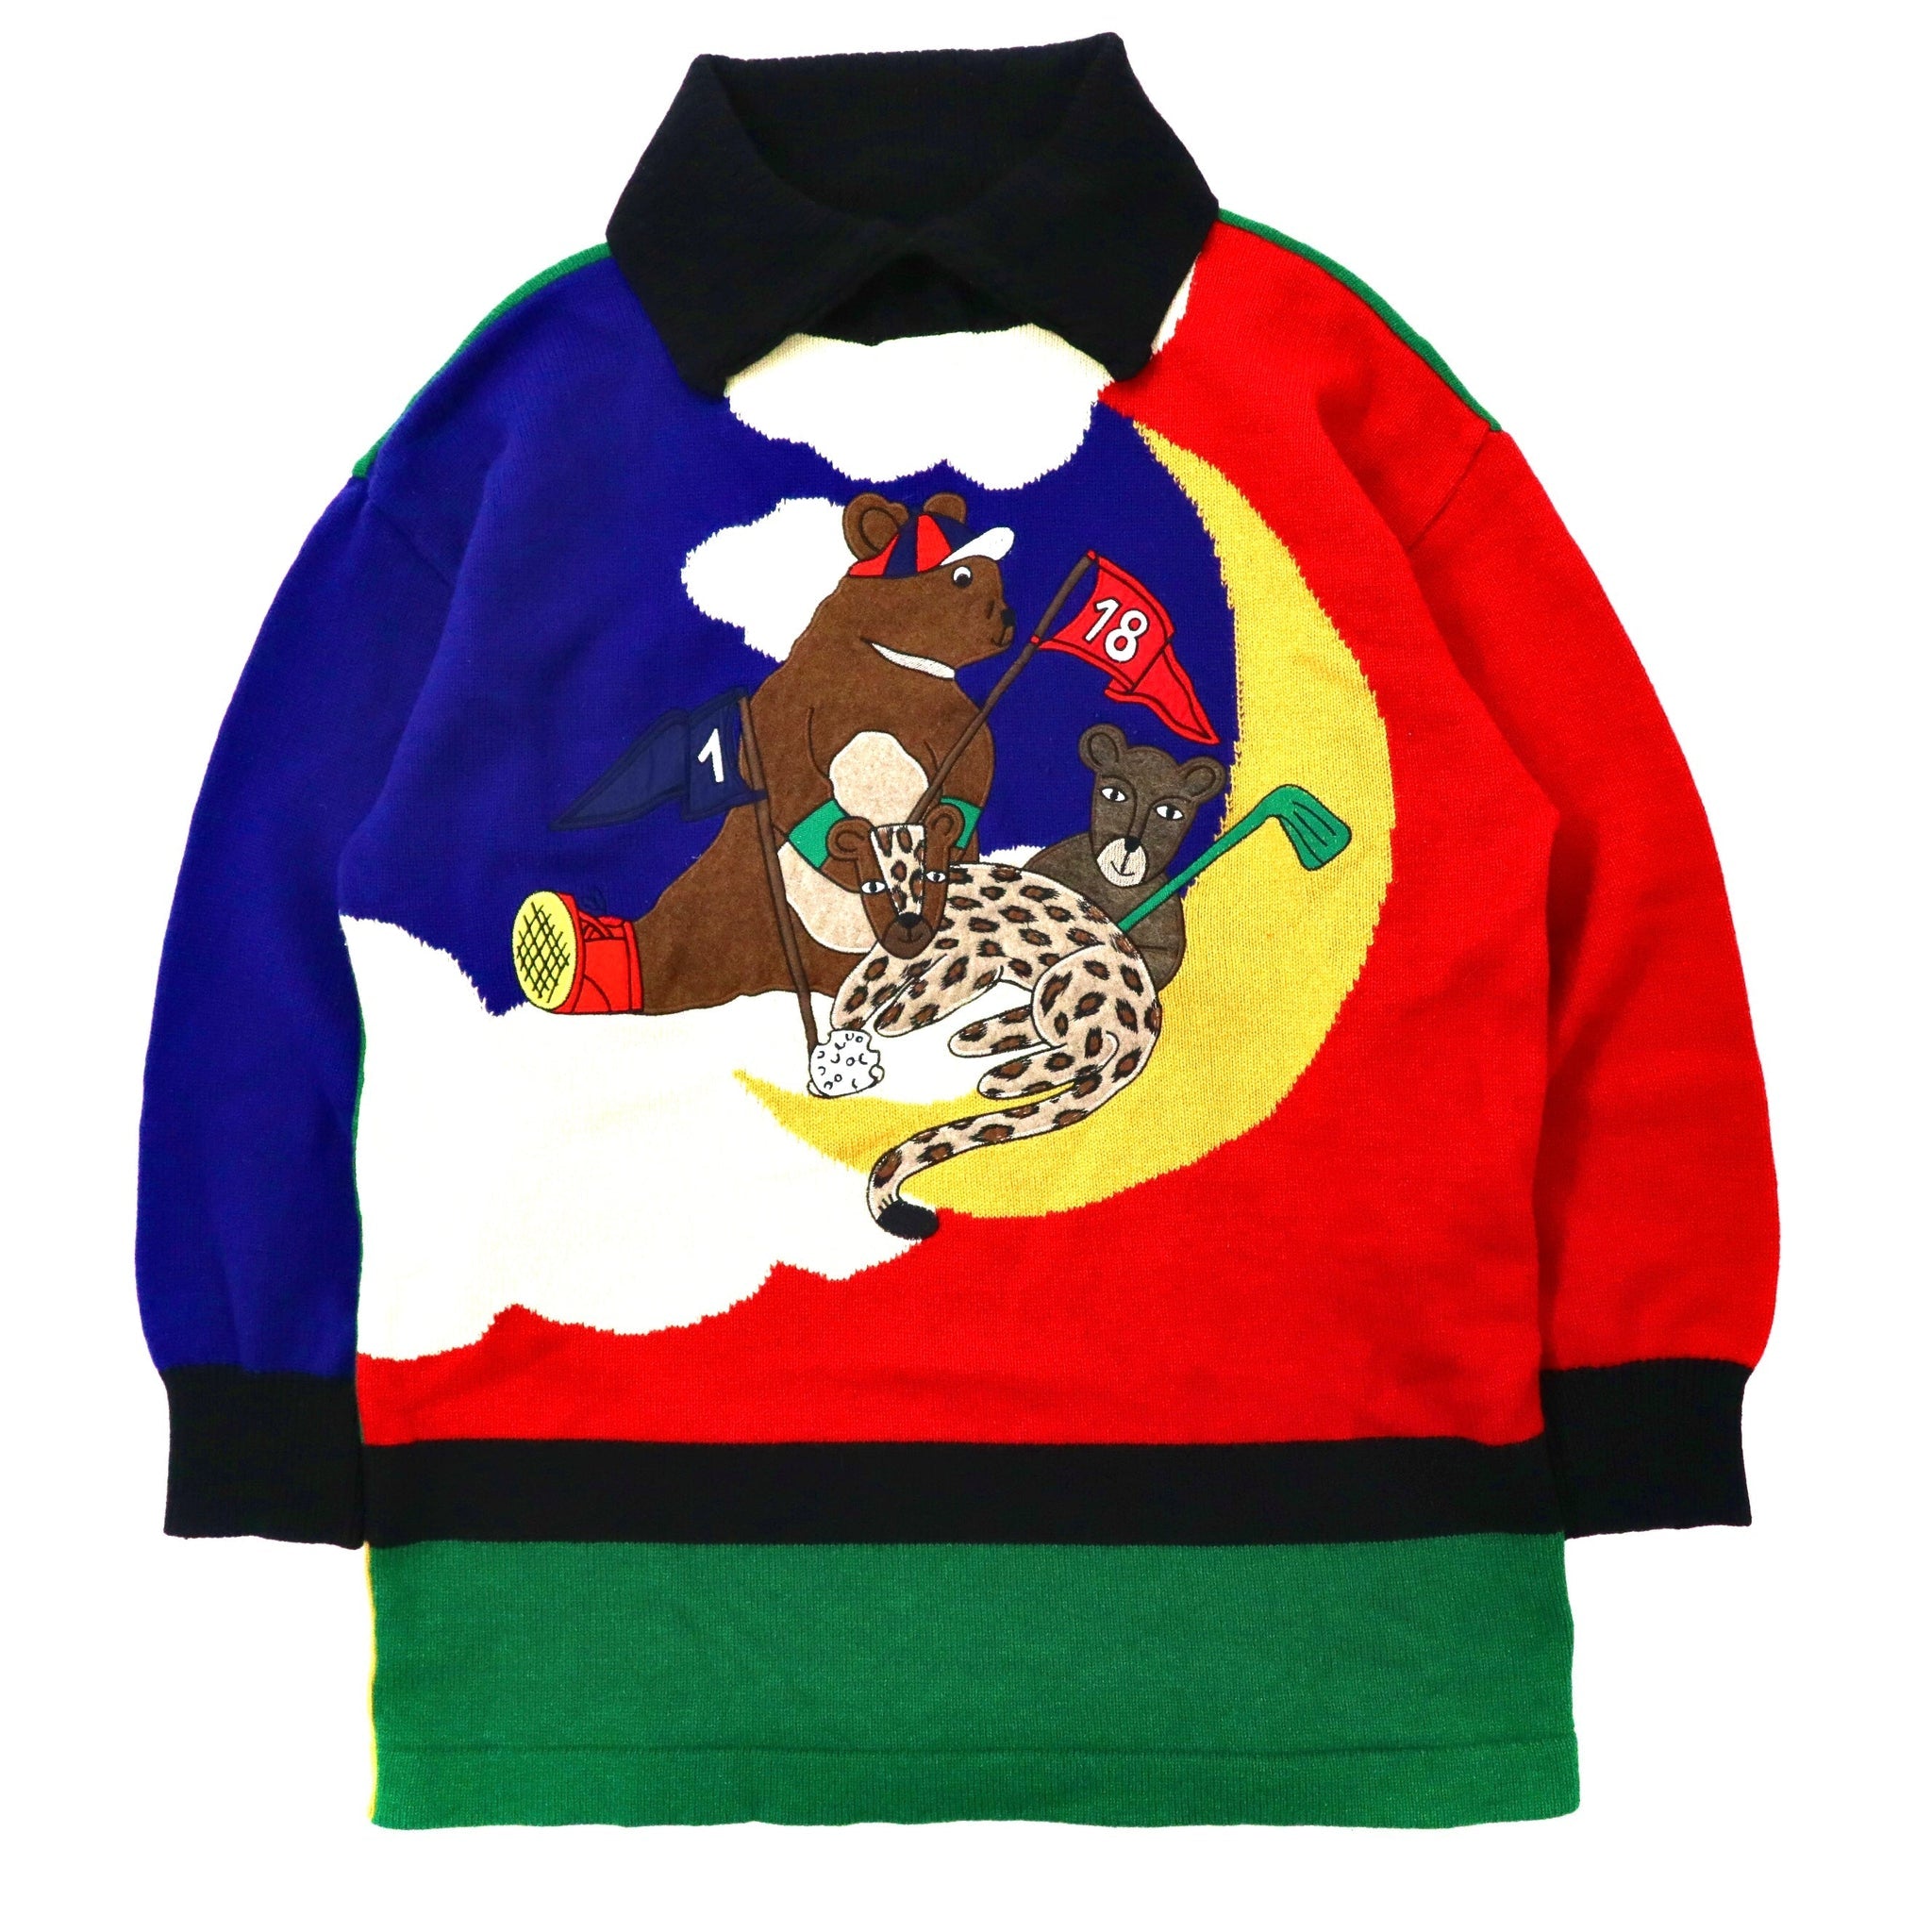 CASTELBAJAC SPORT Big Size Character Knit Sweater 1 Multicolor 